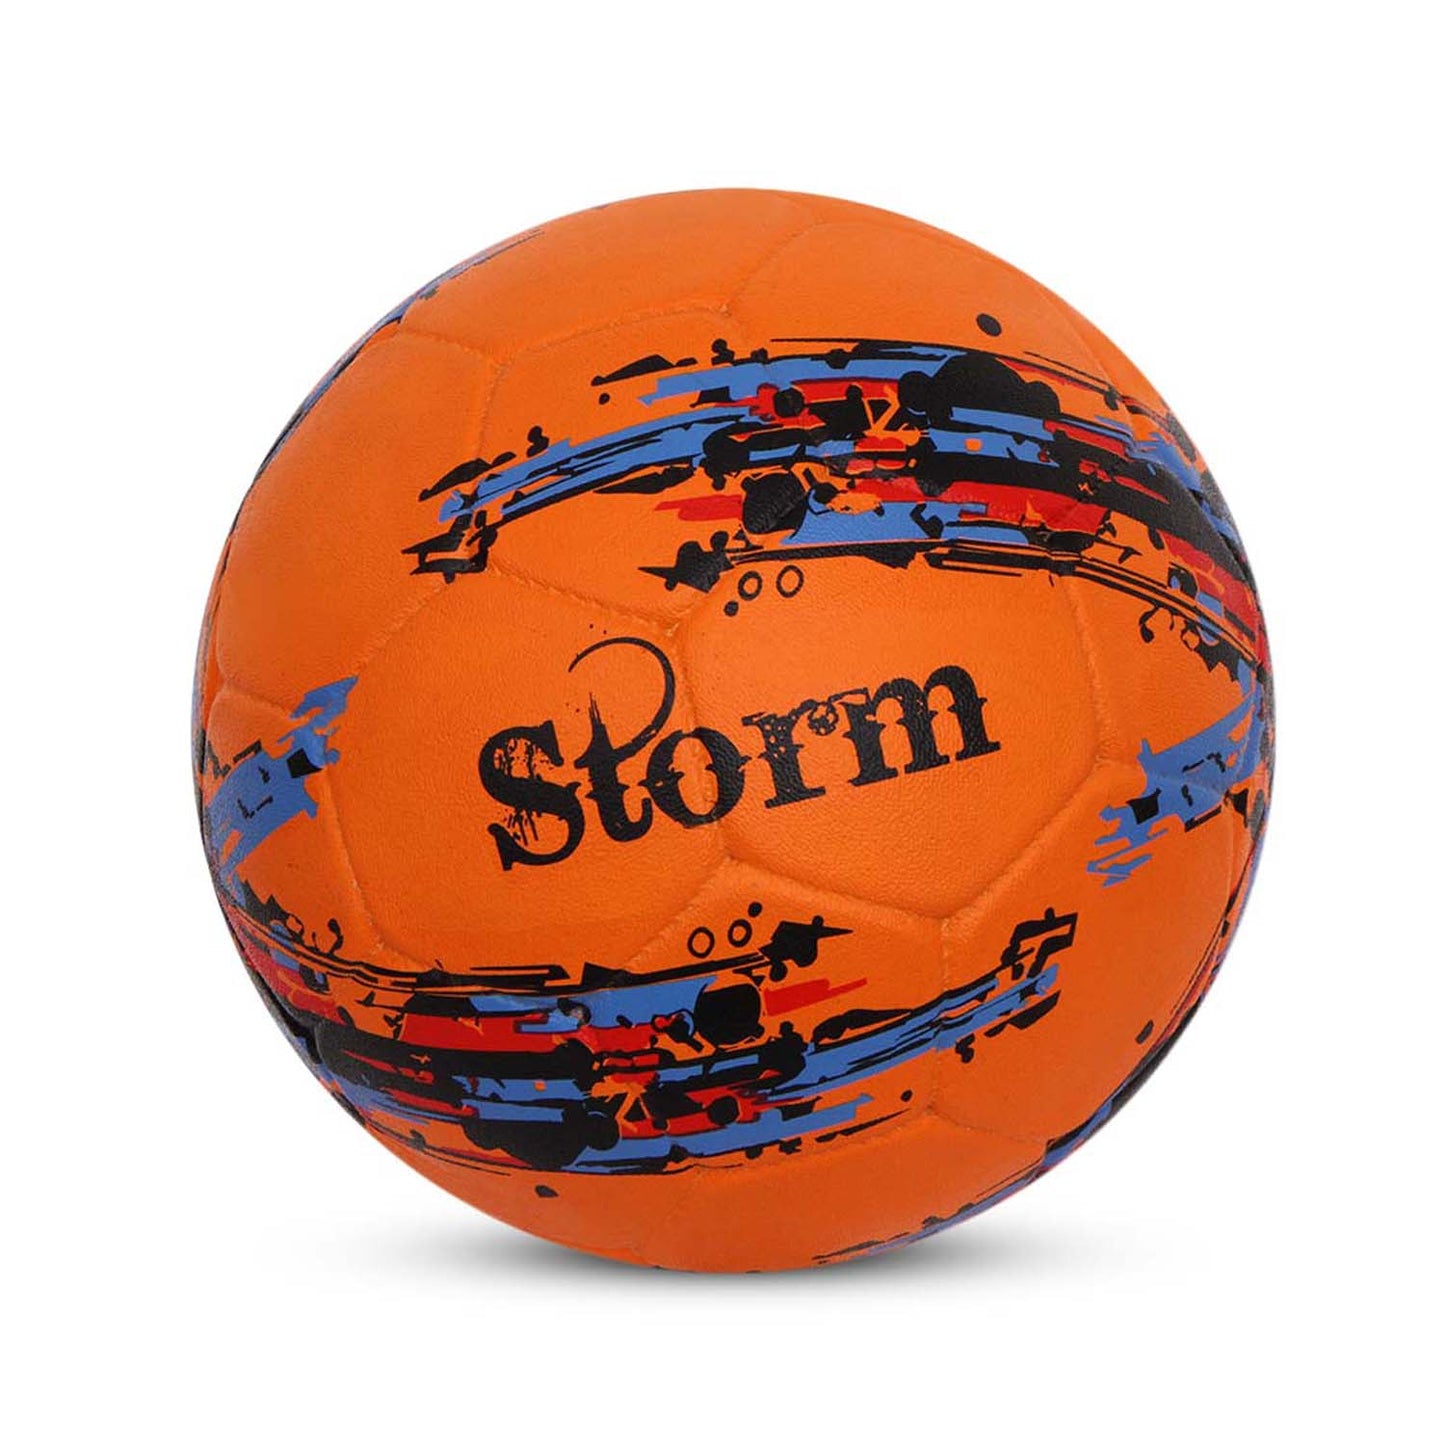 Nivia Storm Rubber Moulded Football, Orange - Size 5 - Best Price online Prokicksports.com